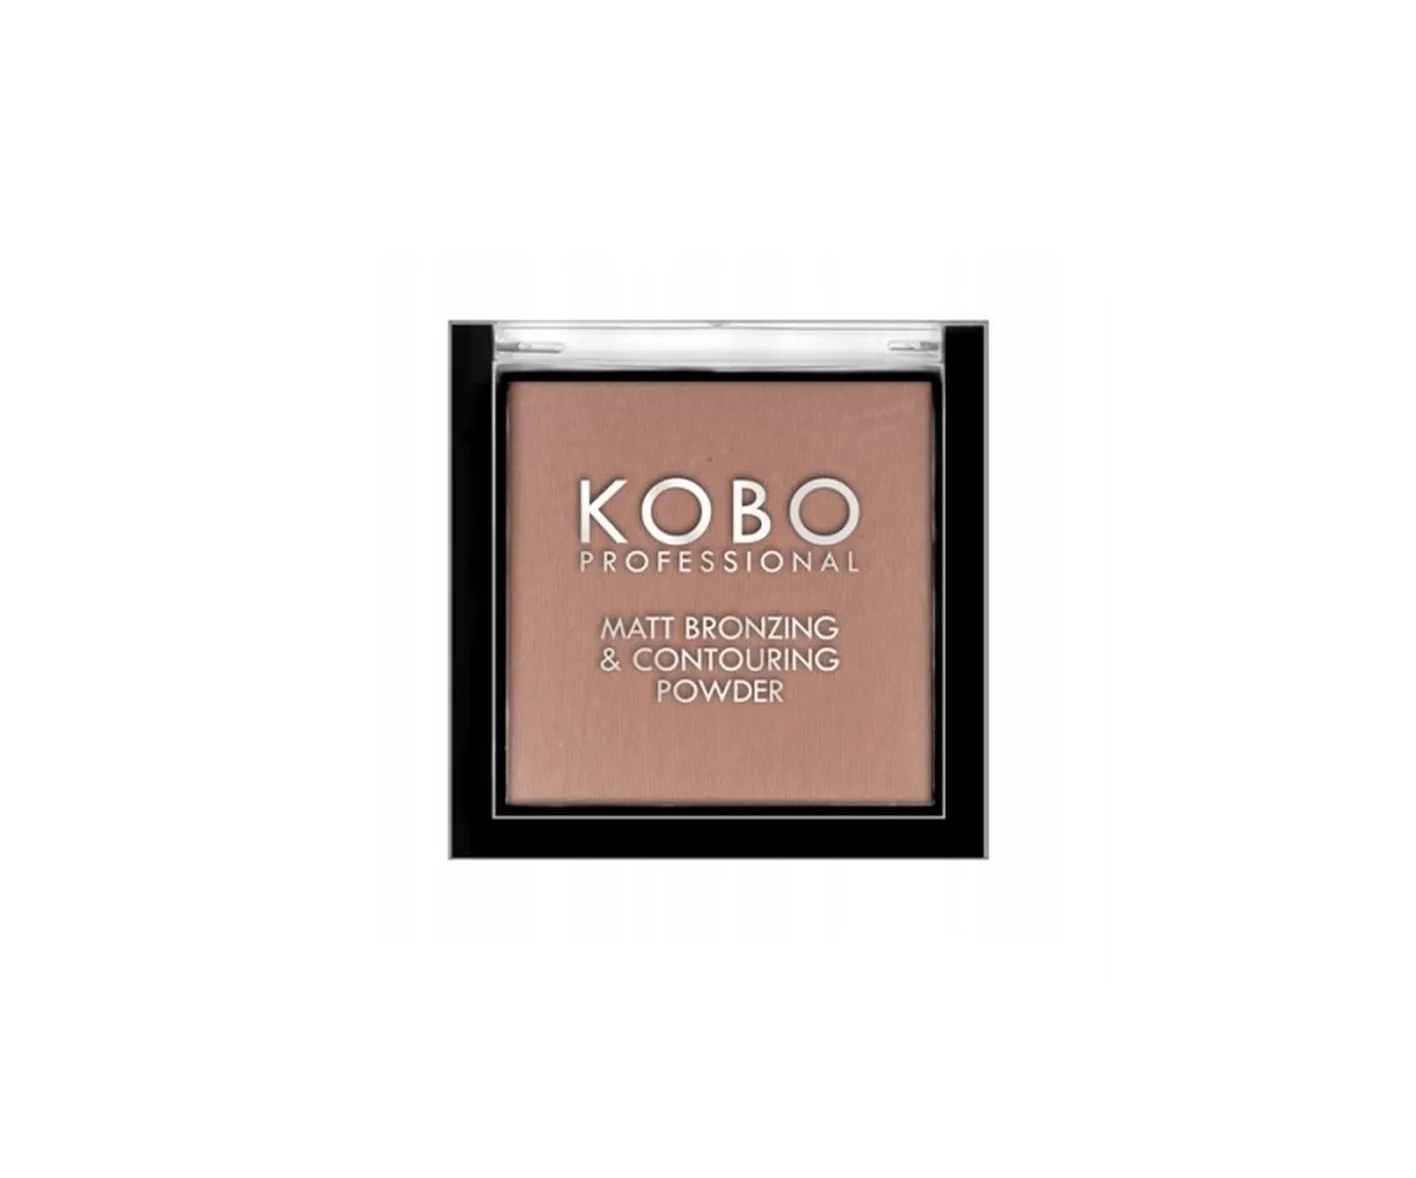 Kobo Professional, Matt Bronzing & Contouring Powder, puder brązujący